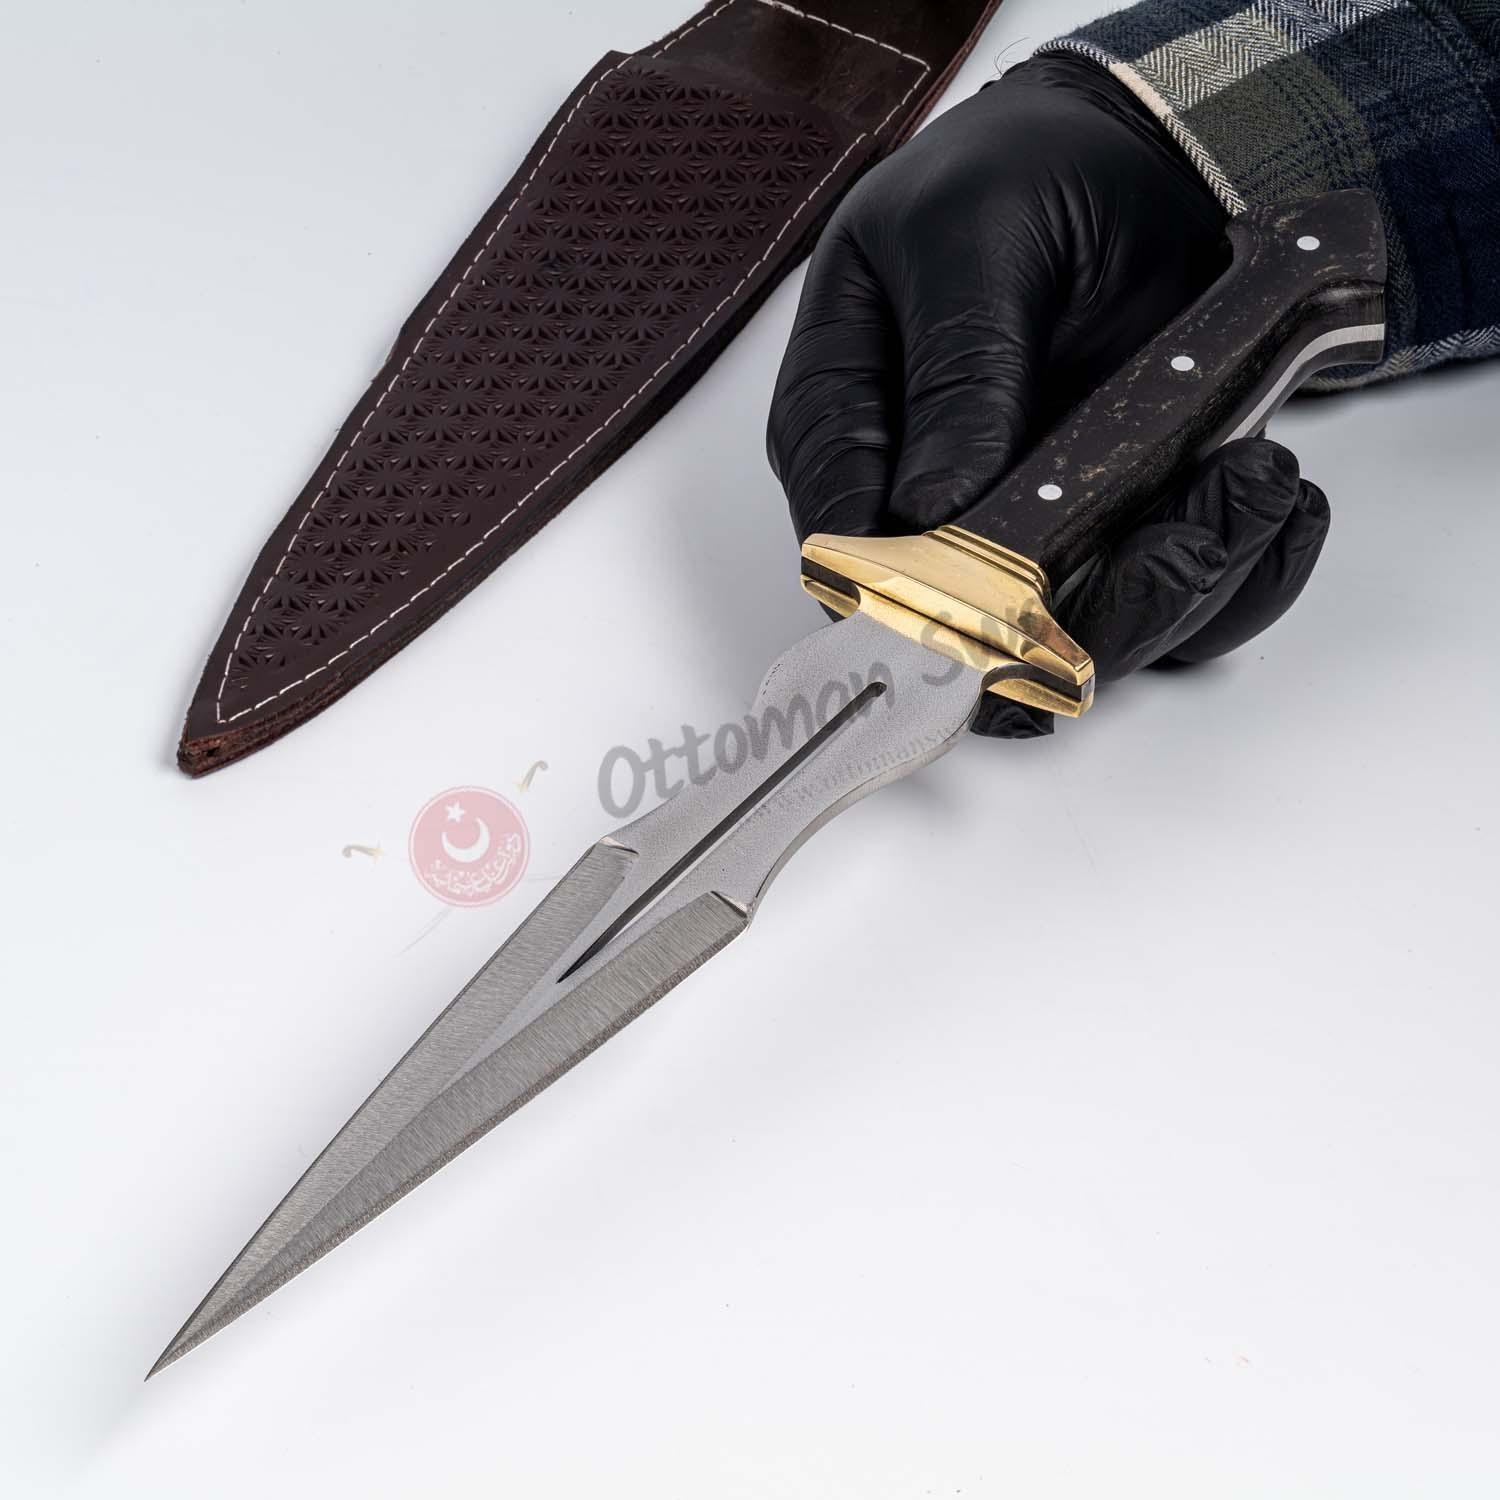 Full Tang Circassian Dagger Knife With Sheath (1)